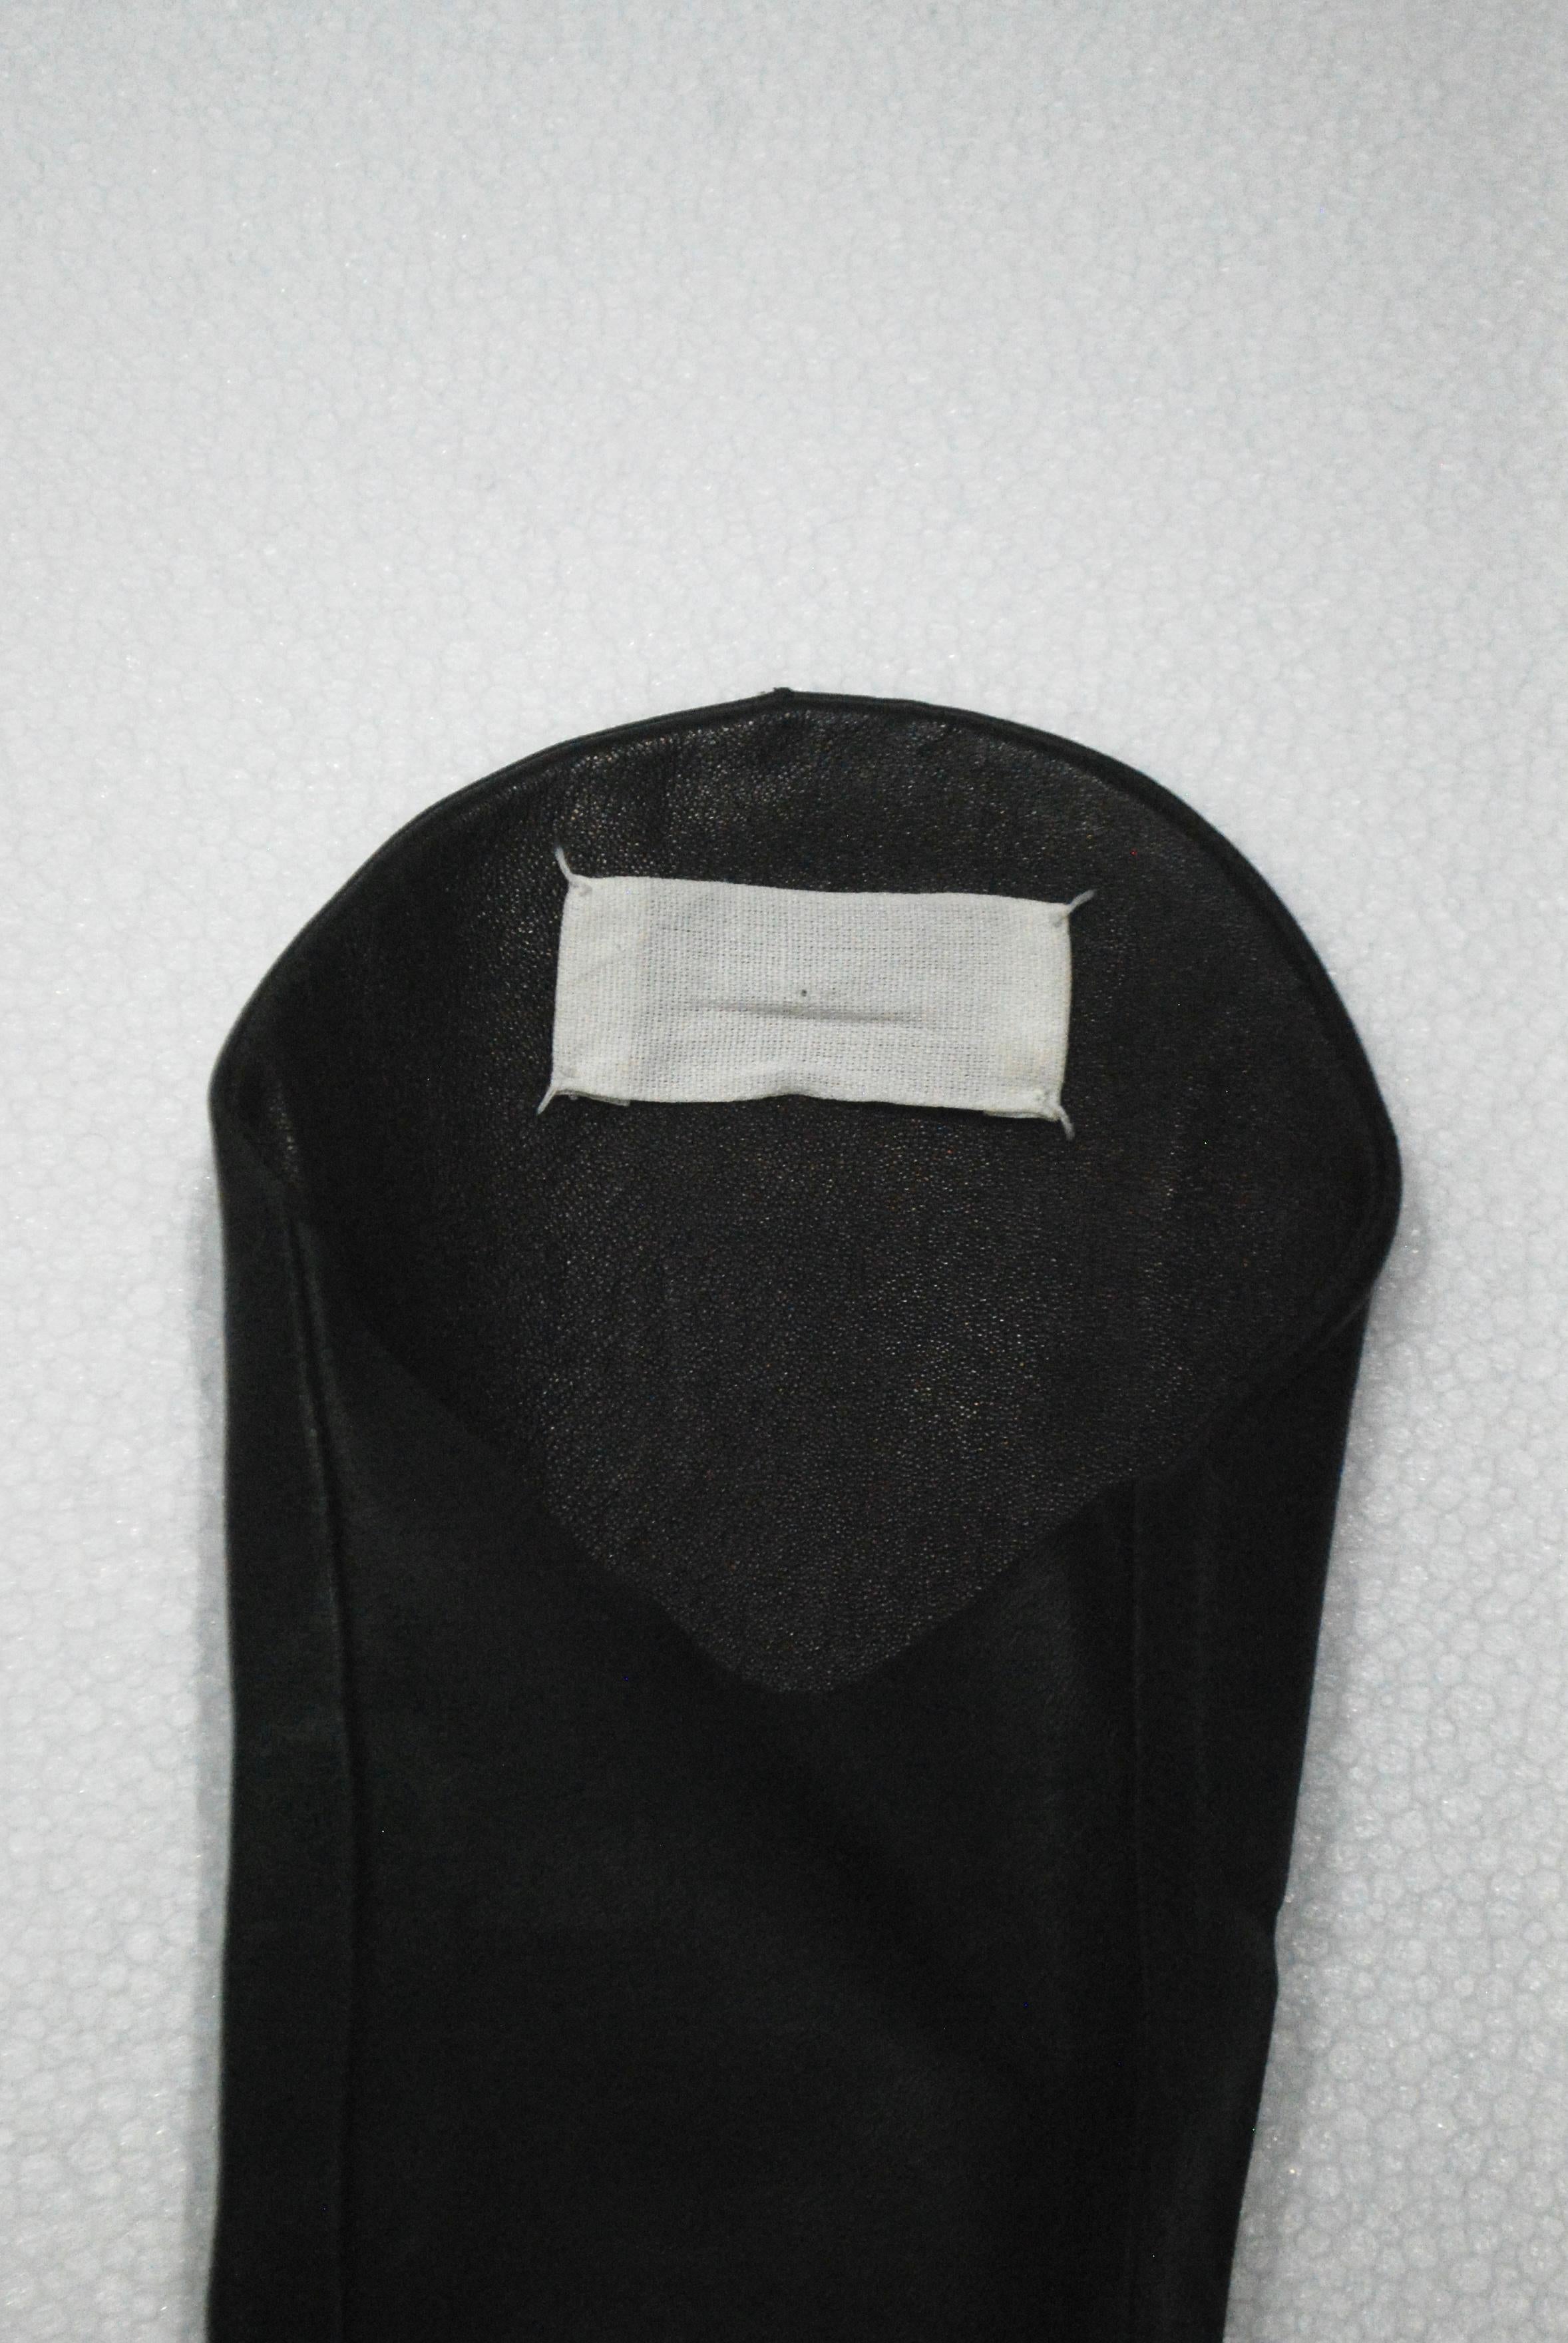 Maison Martin Margiela 1992 AW Black Leather Gloves 1